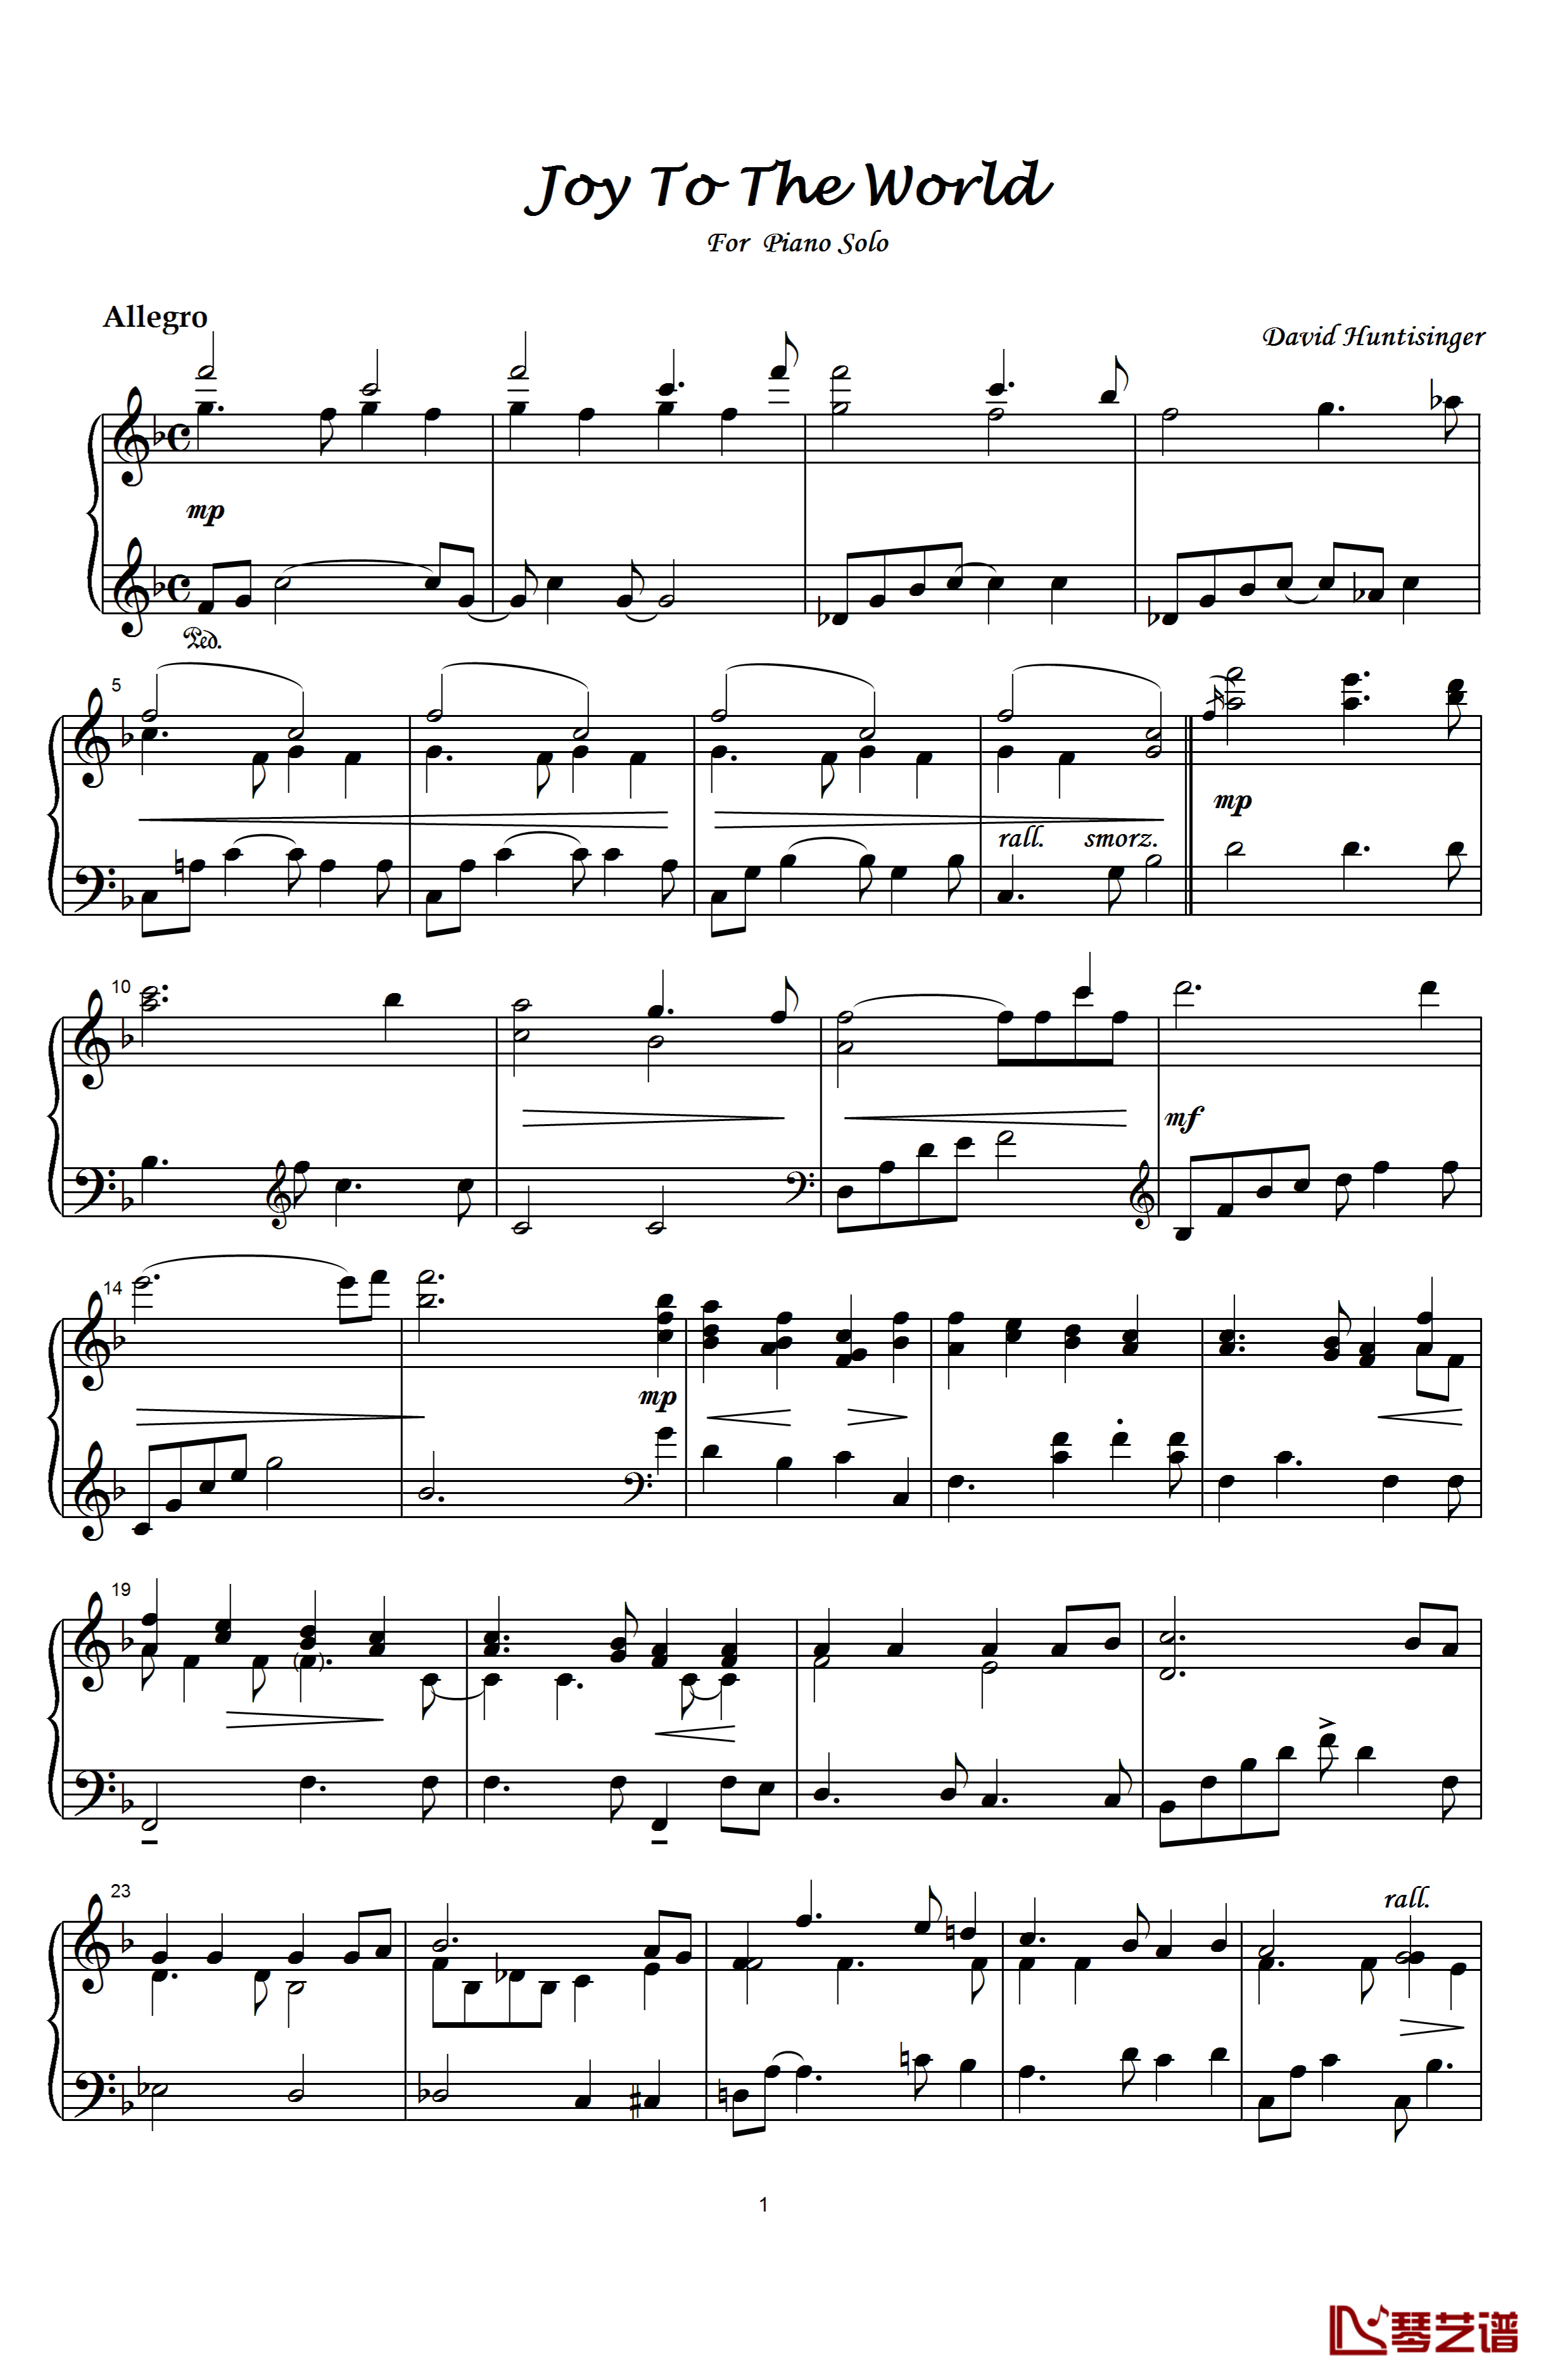 Joy to the world钢琴谱-普世欢腾-David Huntisinger / Handel1